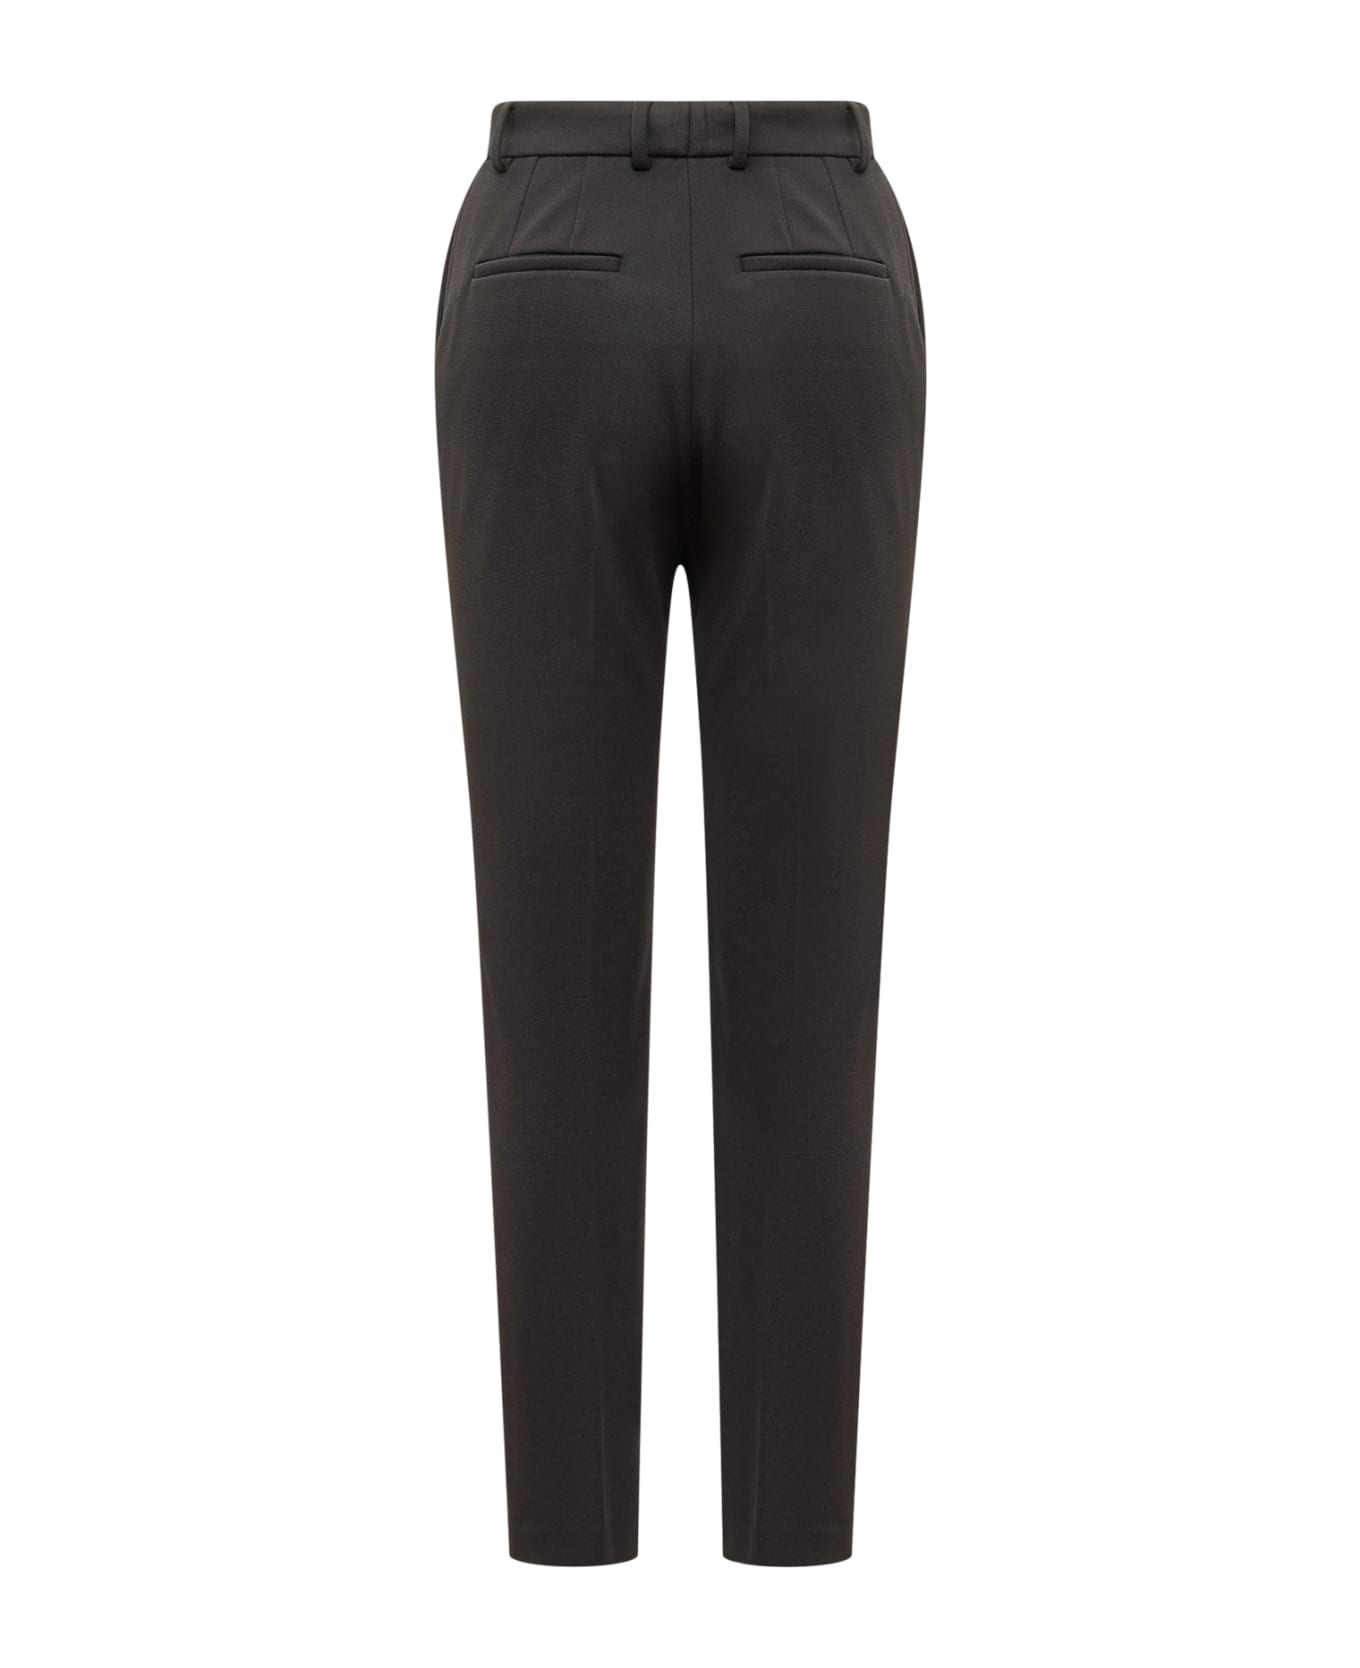 Dolce & Gabbana Milano Stitch Trousers - black